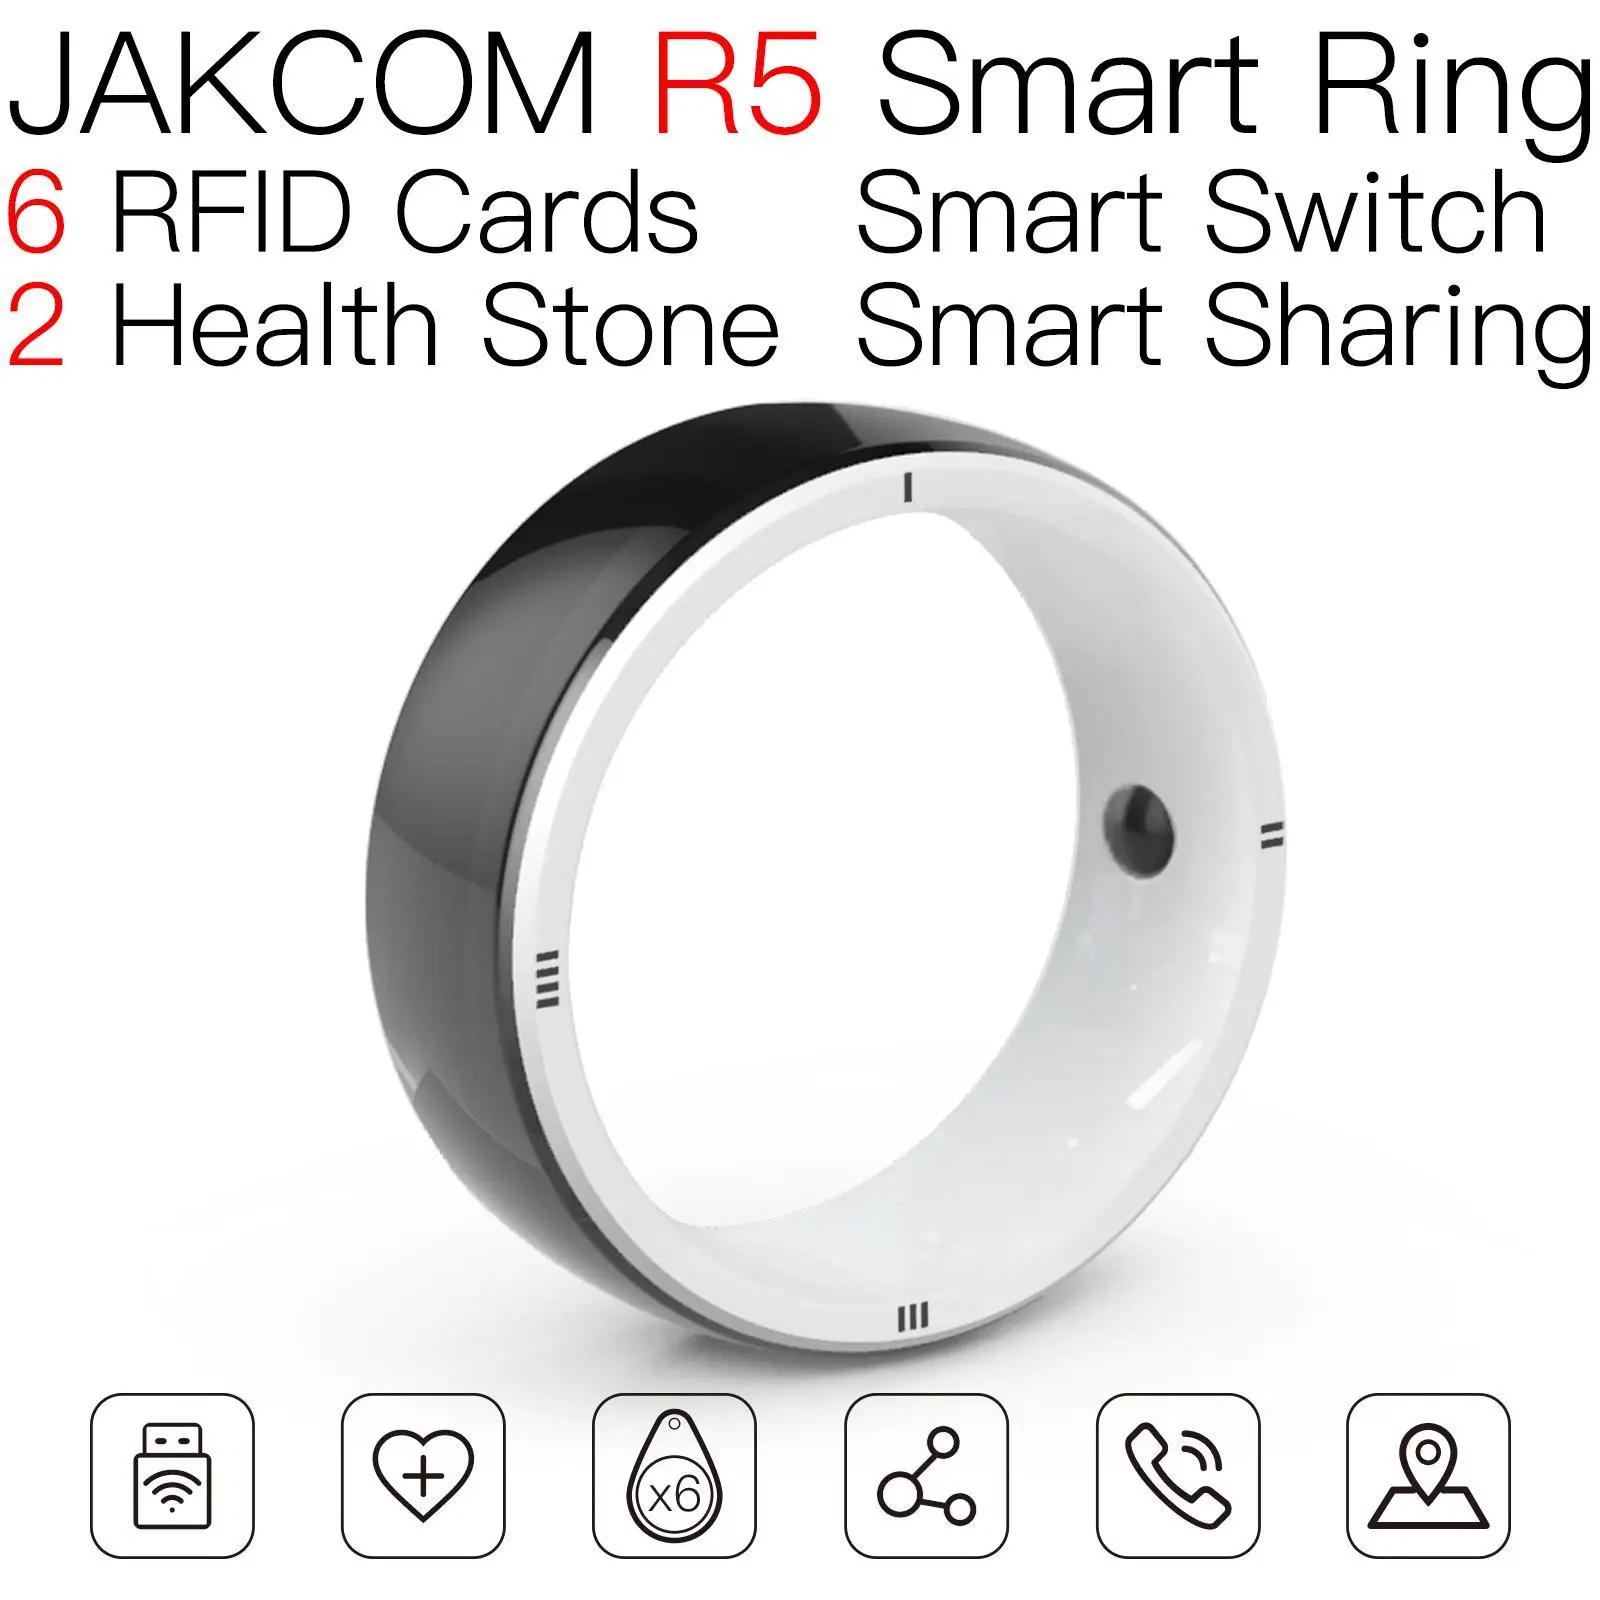 

JAKCOM R5 Smart Ring Super value than nfc social media tag rfid pvc free coin wine 125khz t5577 em4305 rewritable bracelet roll